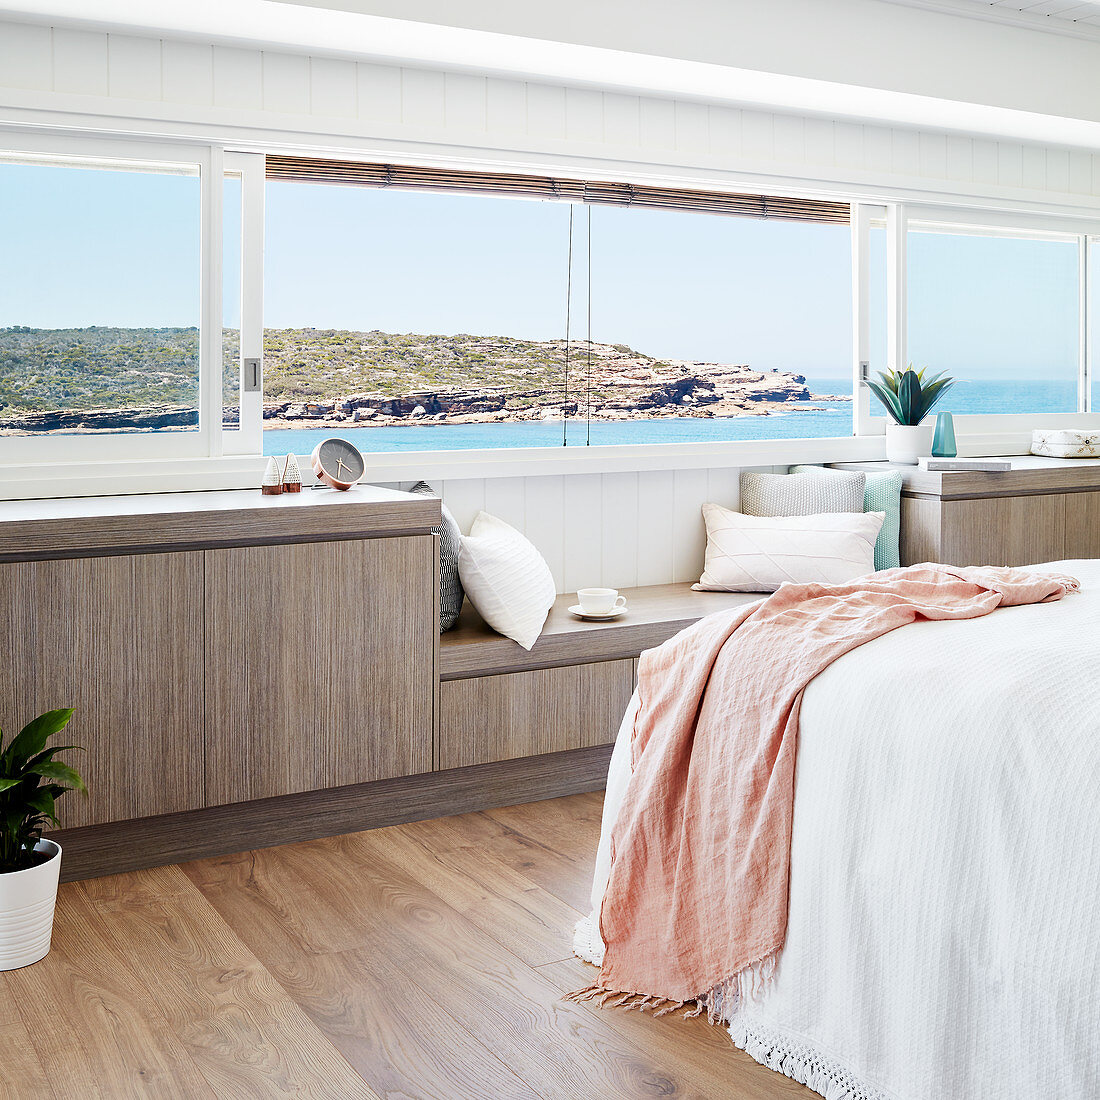 Sideboard with integrated window seat below horizontal panoramic window in bedroom